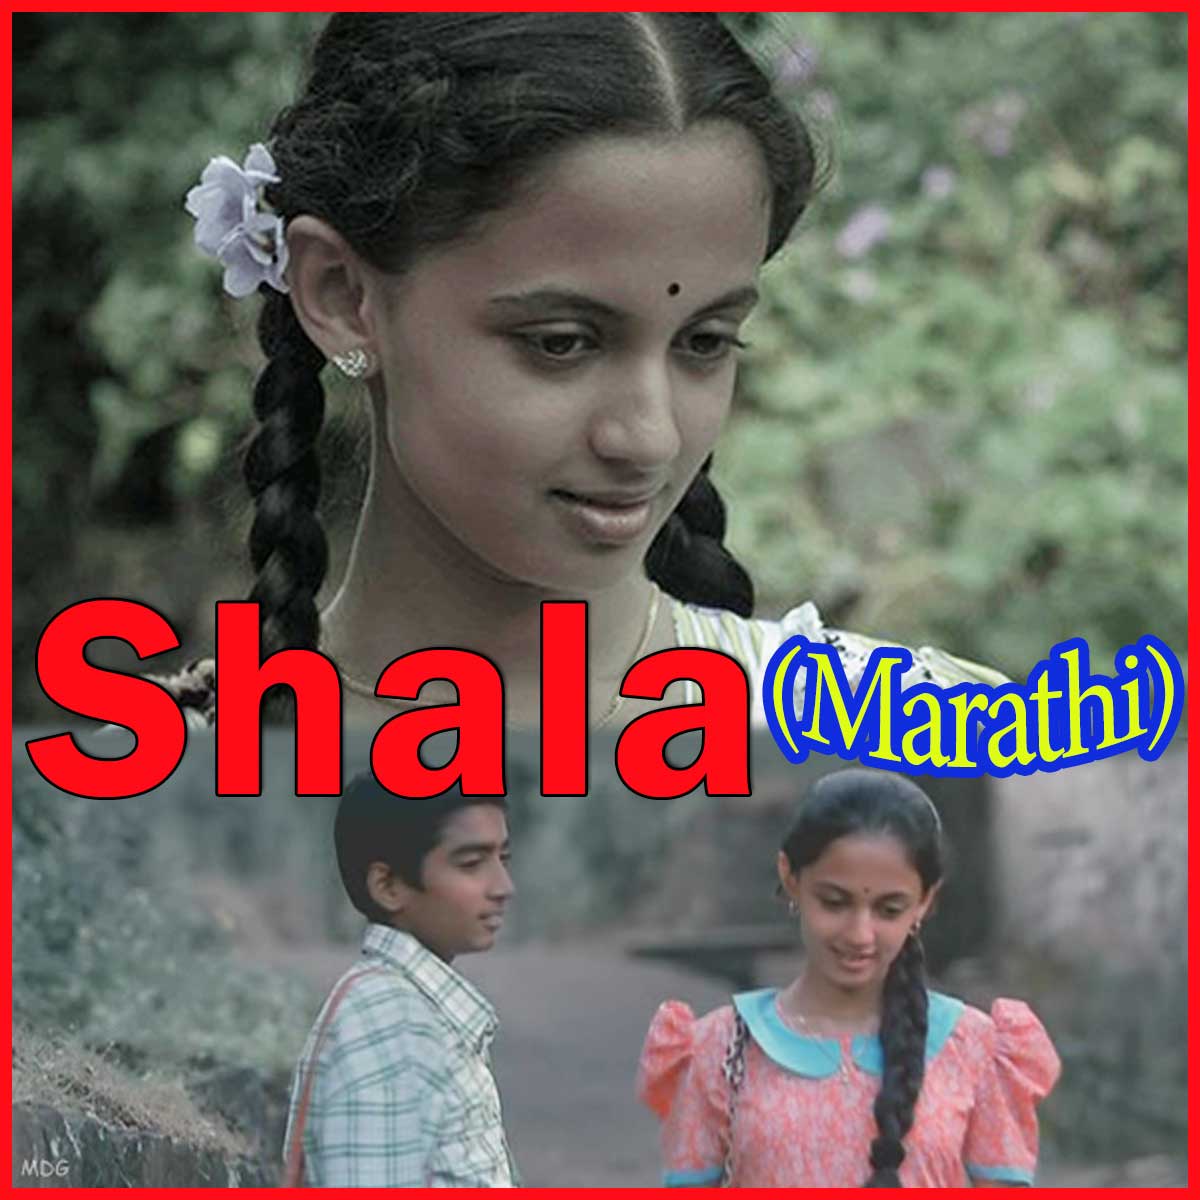 Hairstyles Latest News in Marathi Hairstyles Top Headline Photos Videos  Online  TV9 Marathi